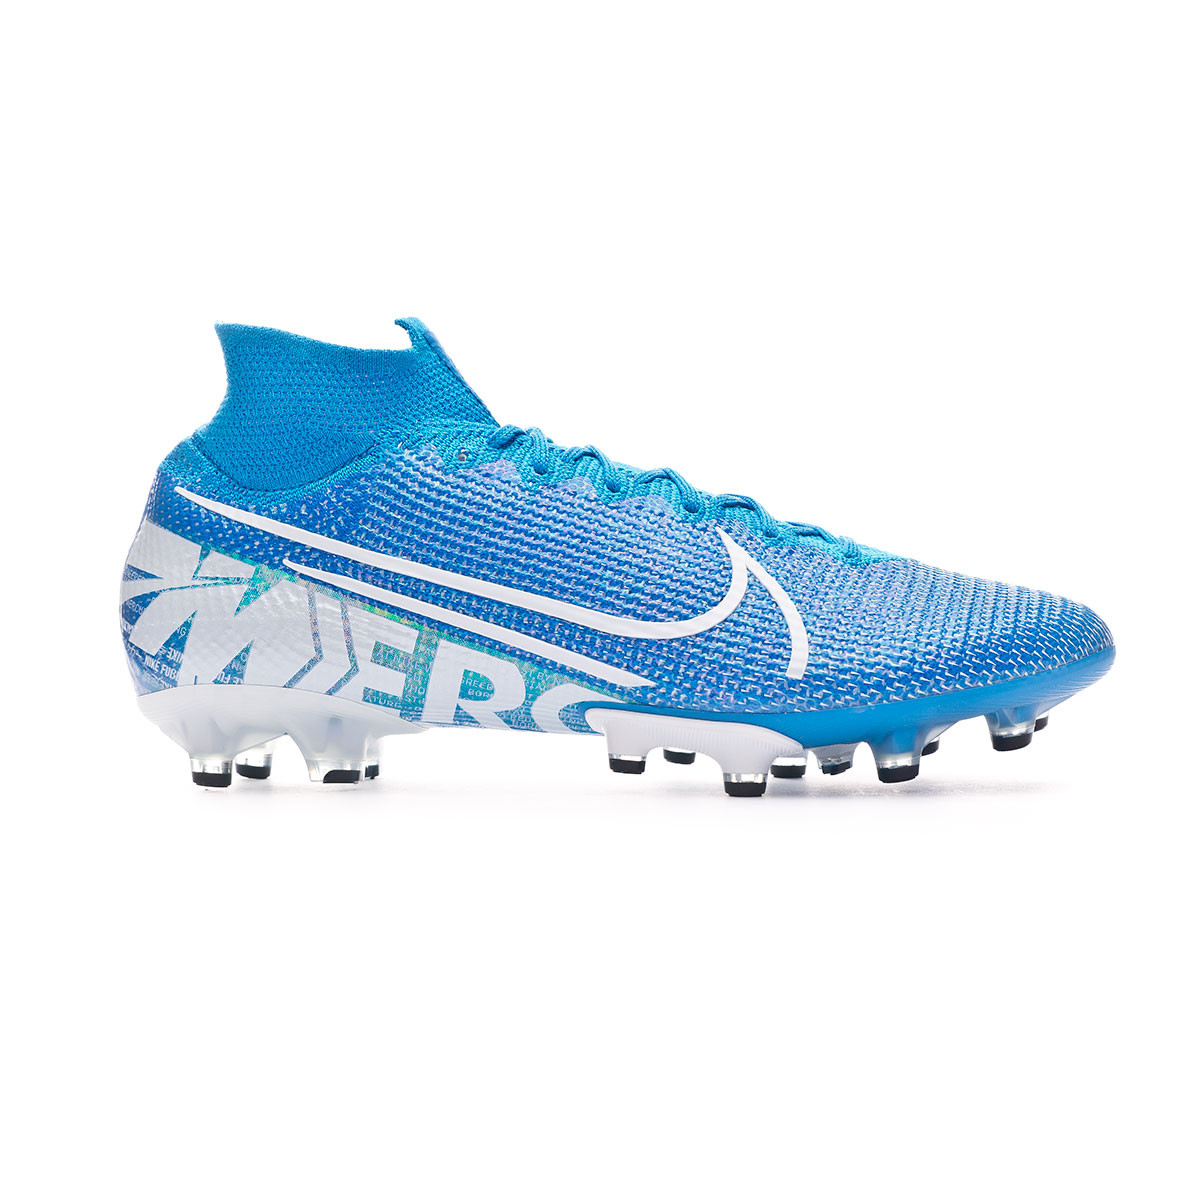 Football Boots Nike Mercurial Superfly VII Elite AG-Pro Blue  hero-White-Volt-Obsidian - Football store Fútbol Emotion